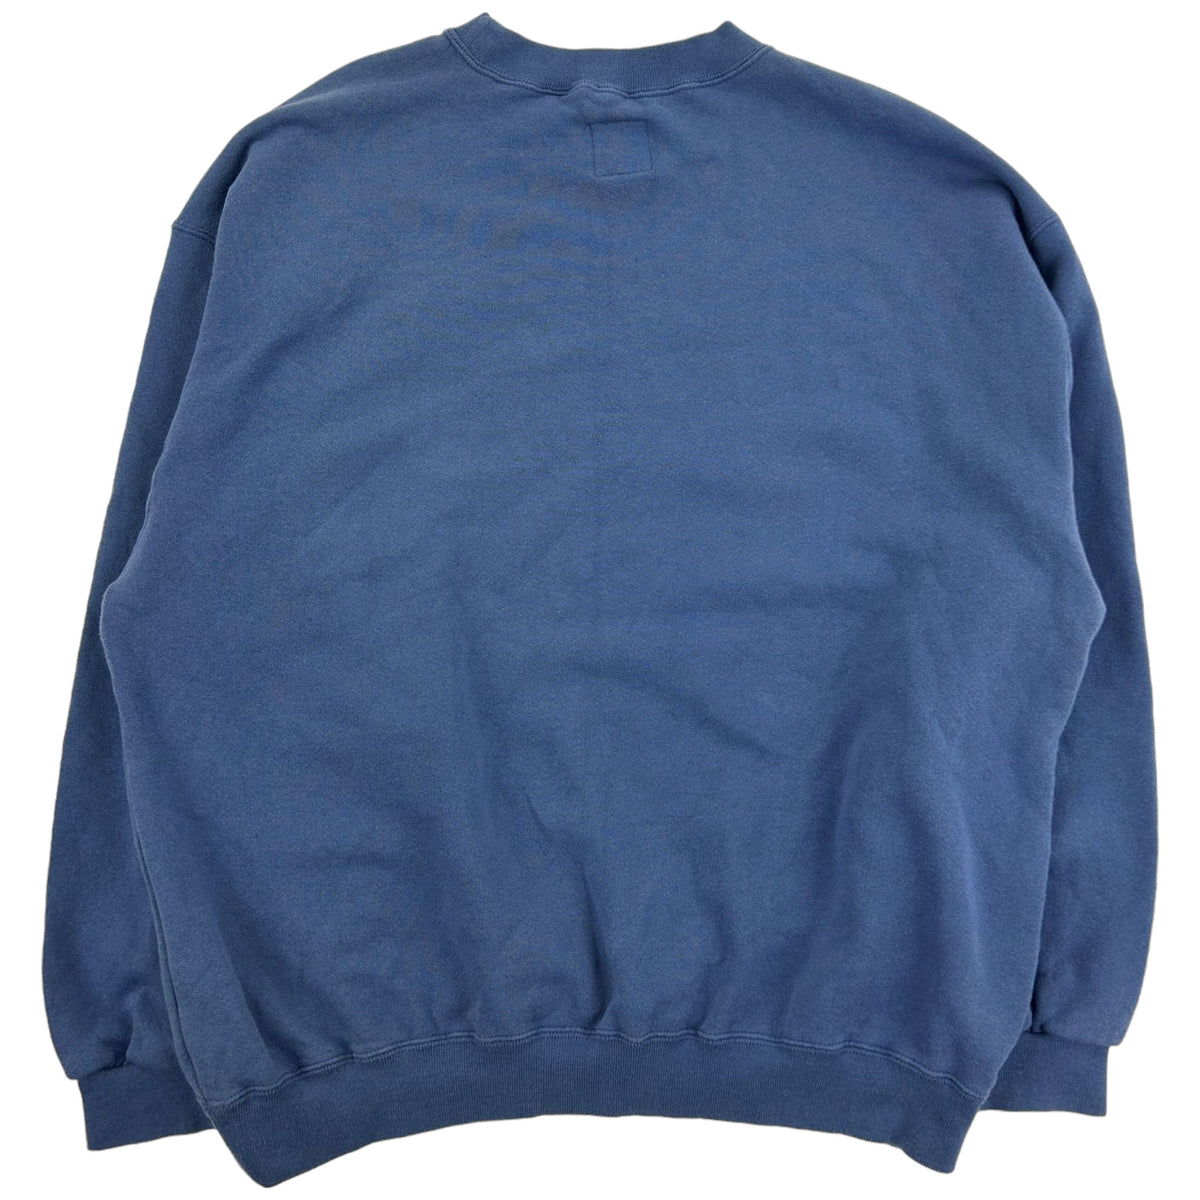 Vintage Nike Crewneck Sweatshirt Size L